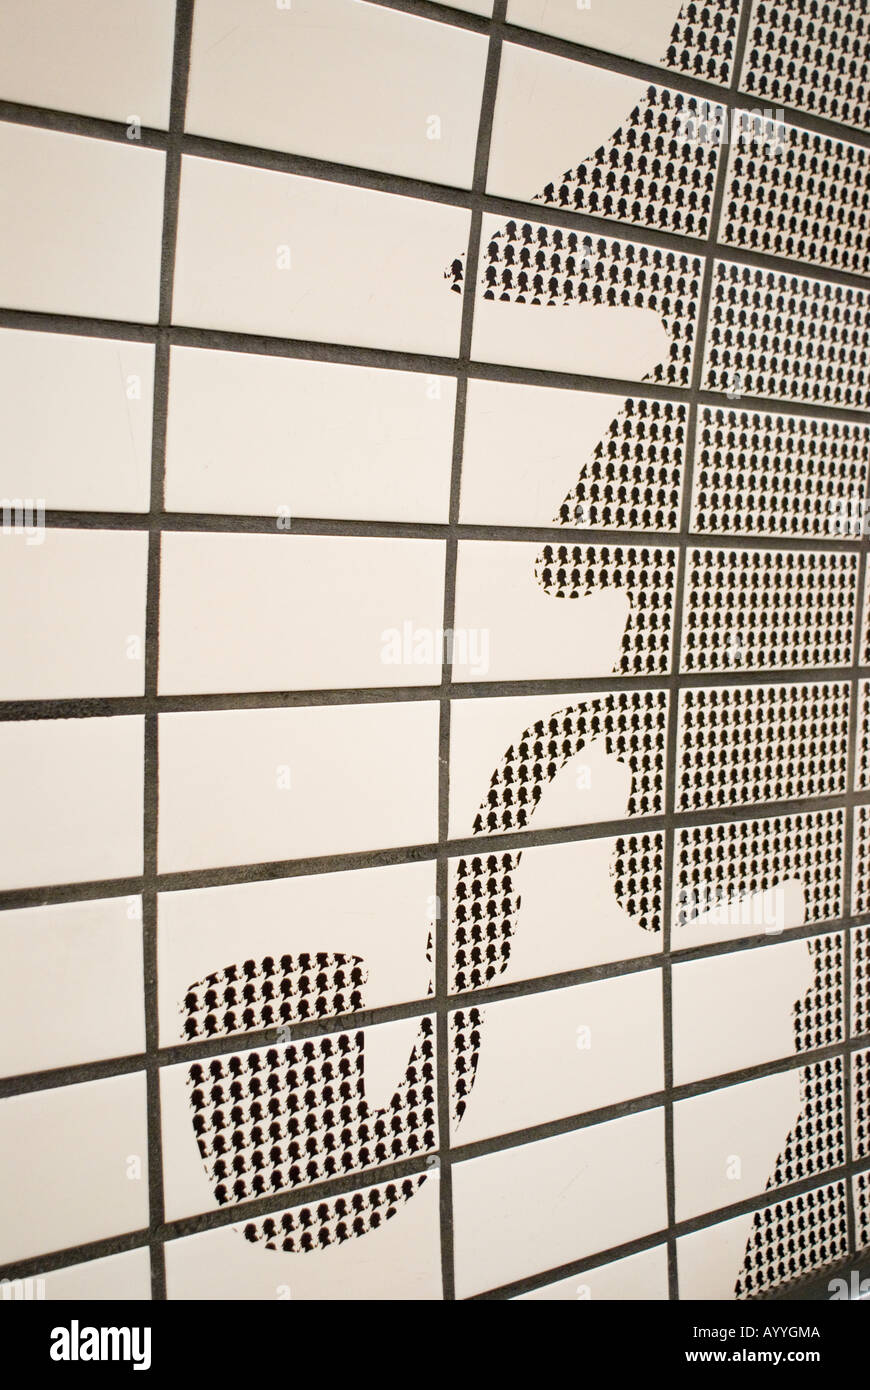 Sherlock Holmes motif decorates the tiles at Baker Street Underground Station London England Stock Photo